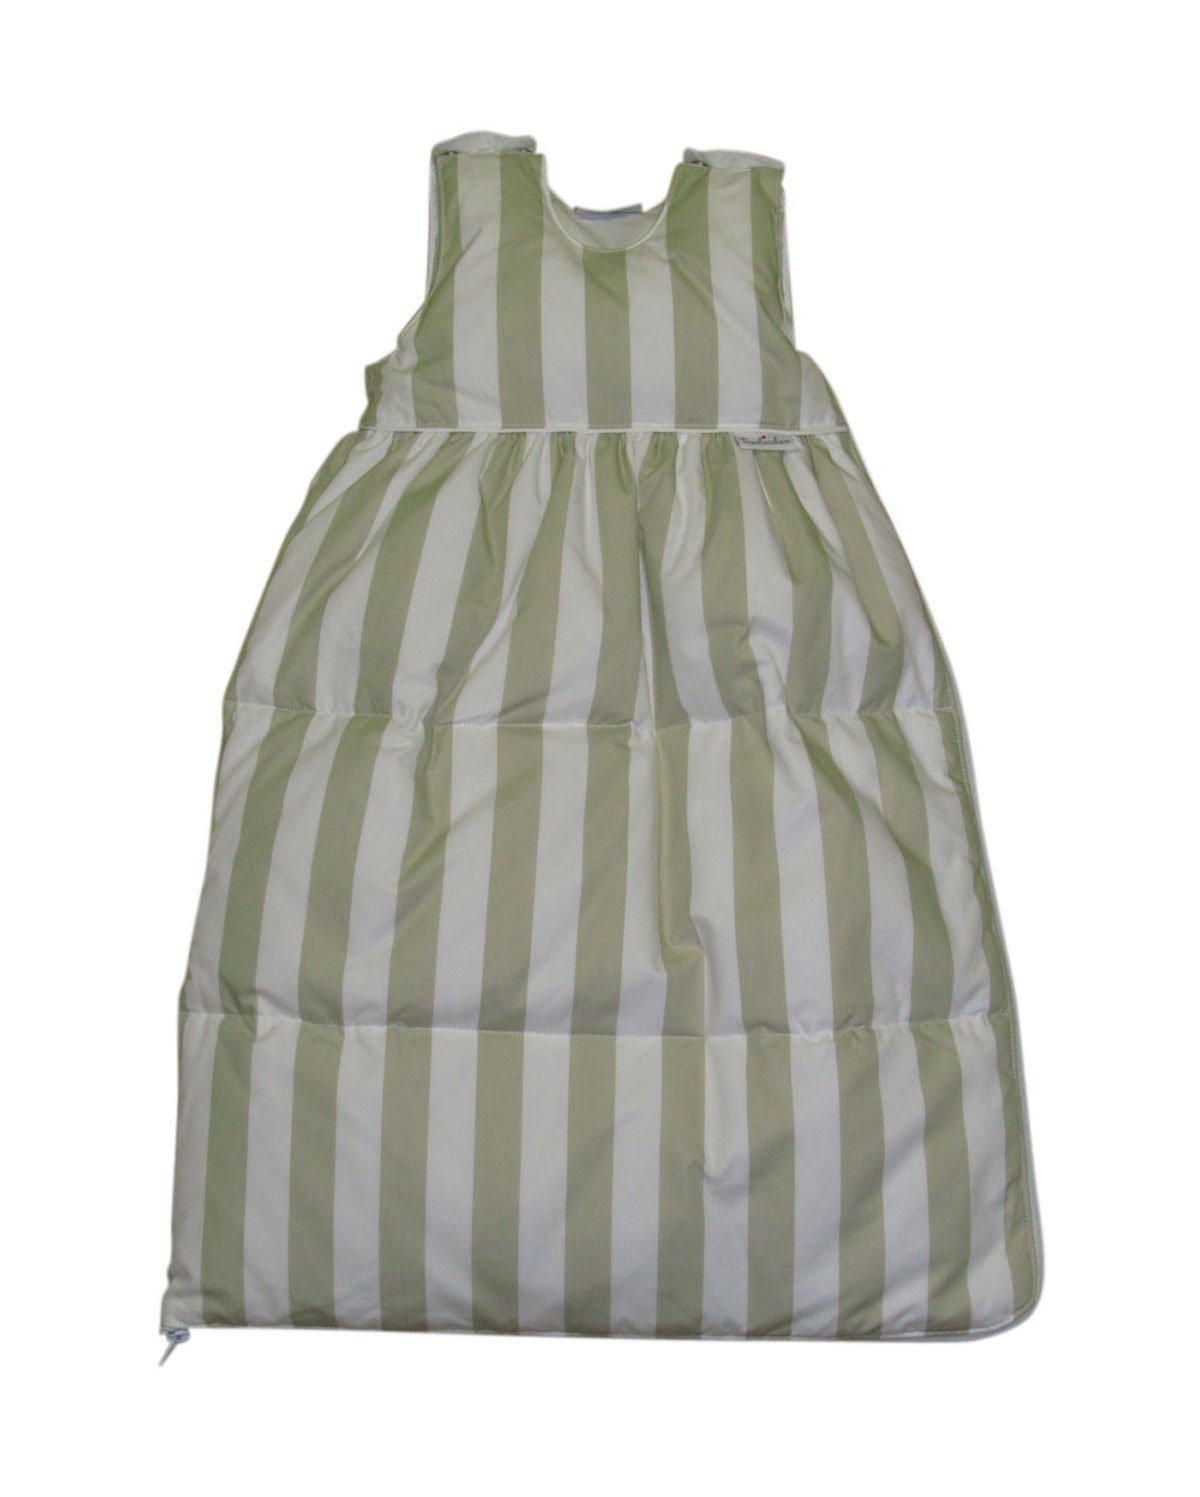 Tavolinchen 40/105-129-70 Sleeping Bag Down Material 90 cm Wide White/Beige Stripes